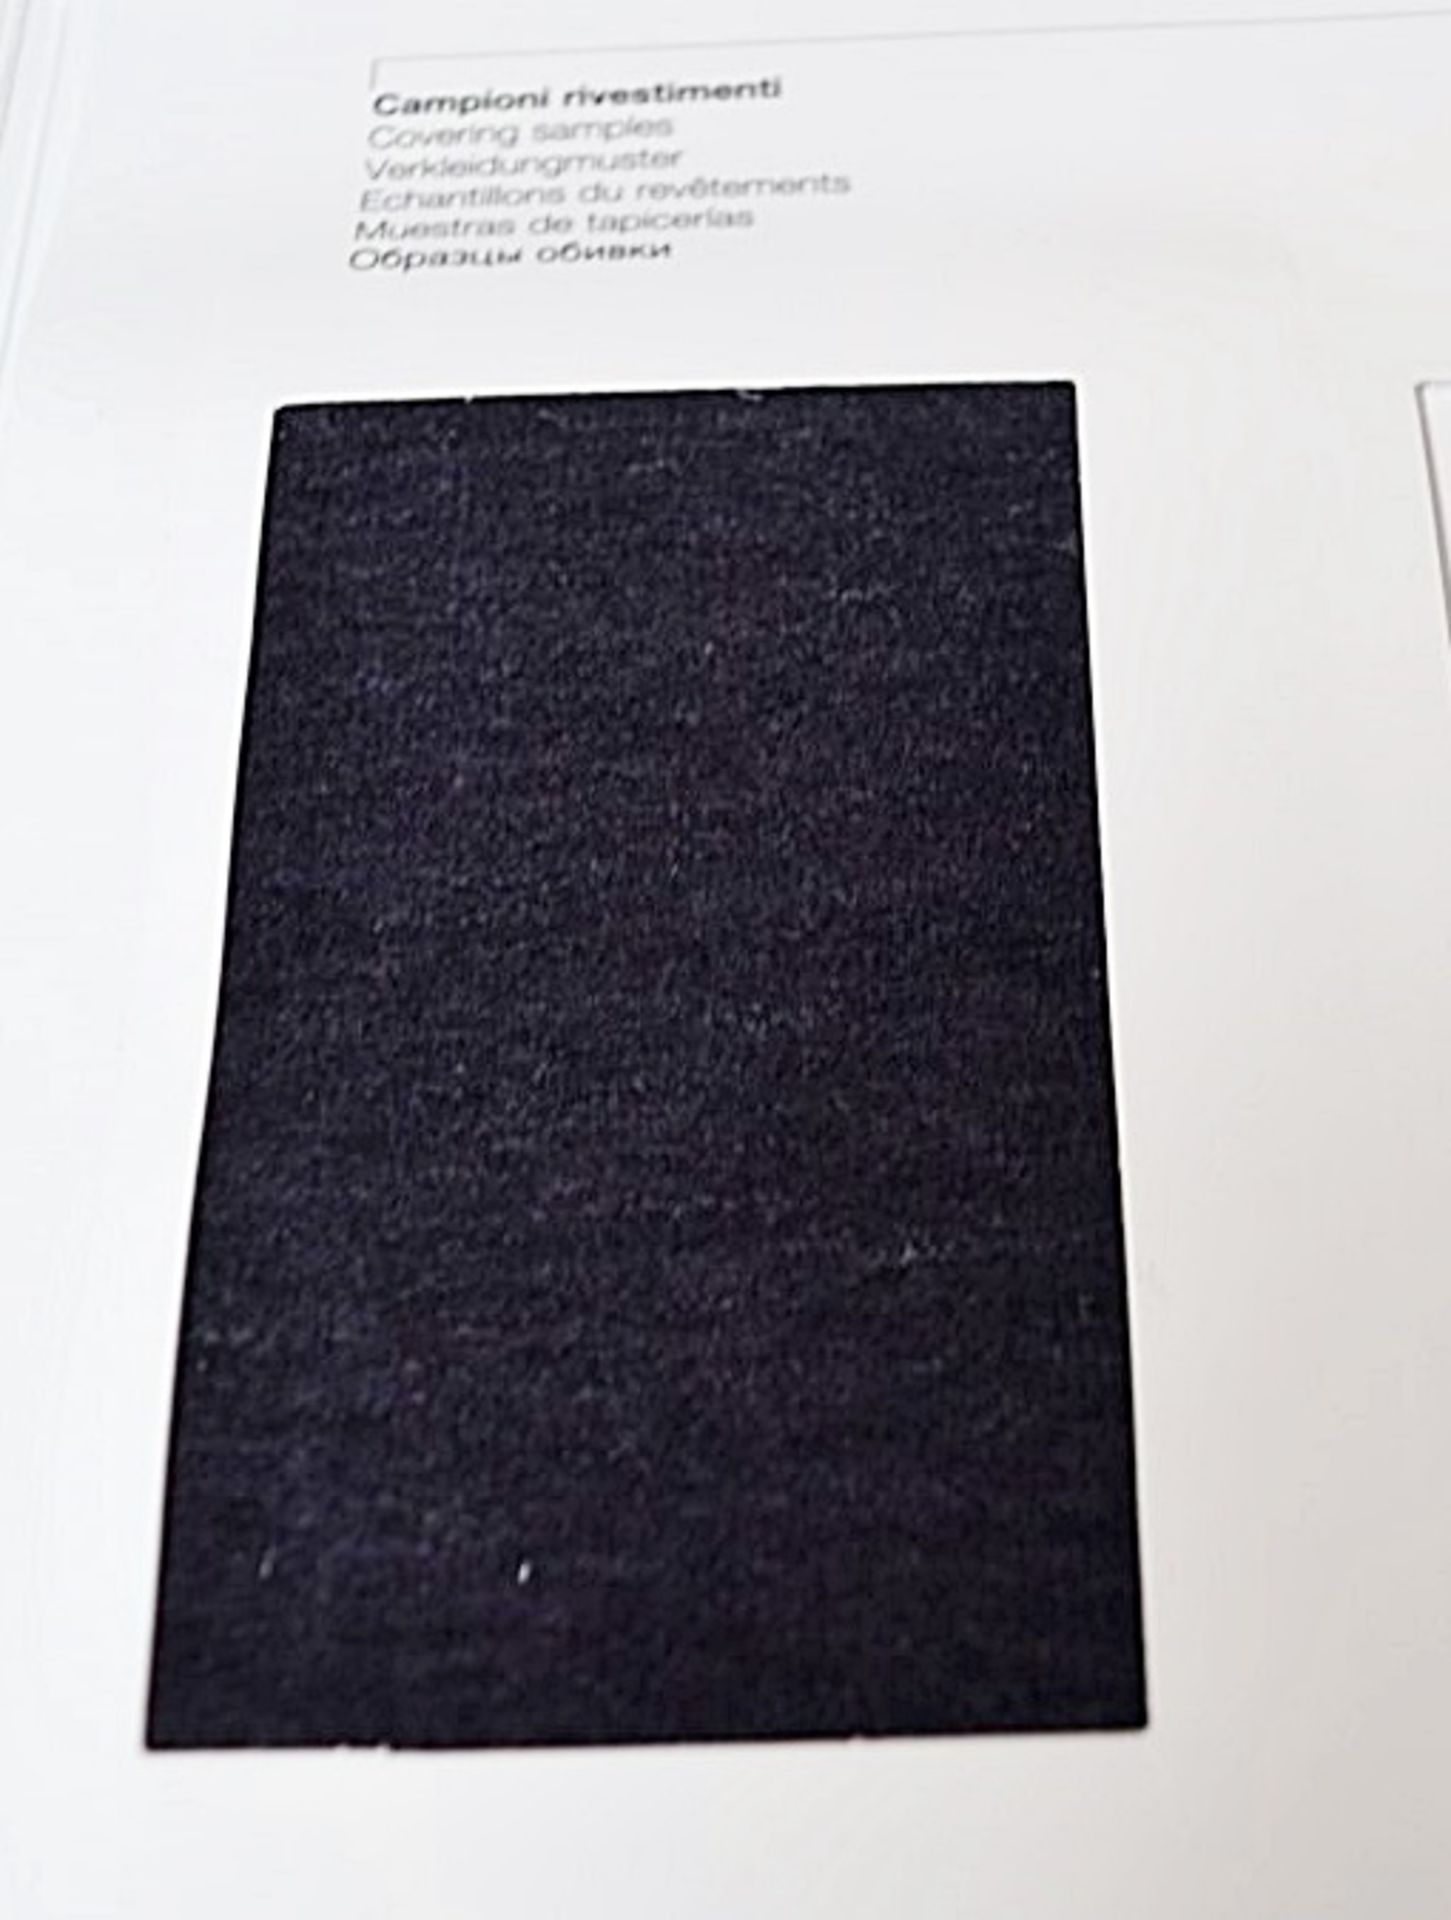 1 x B&B ITALIA "Fat Sofa 210" Cover - Stain-resistant Velvet Fleece Fabric - Ref: 5129664 - - Image 6 of 10